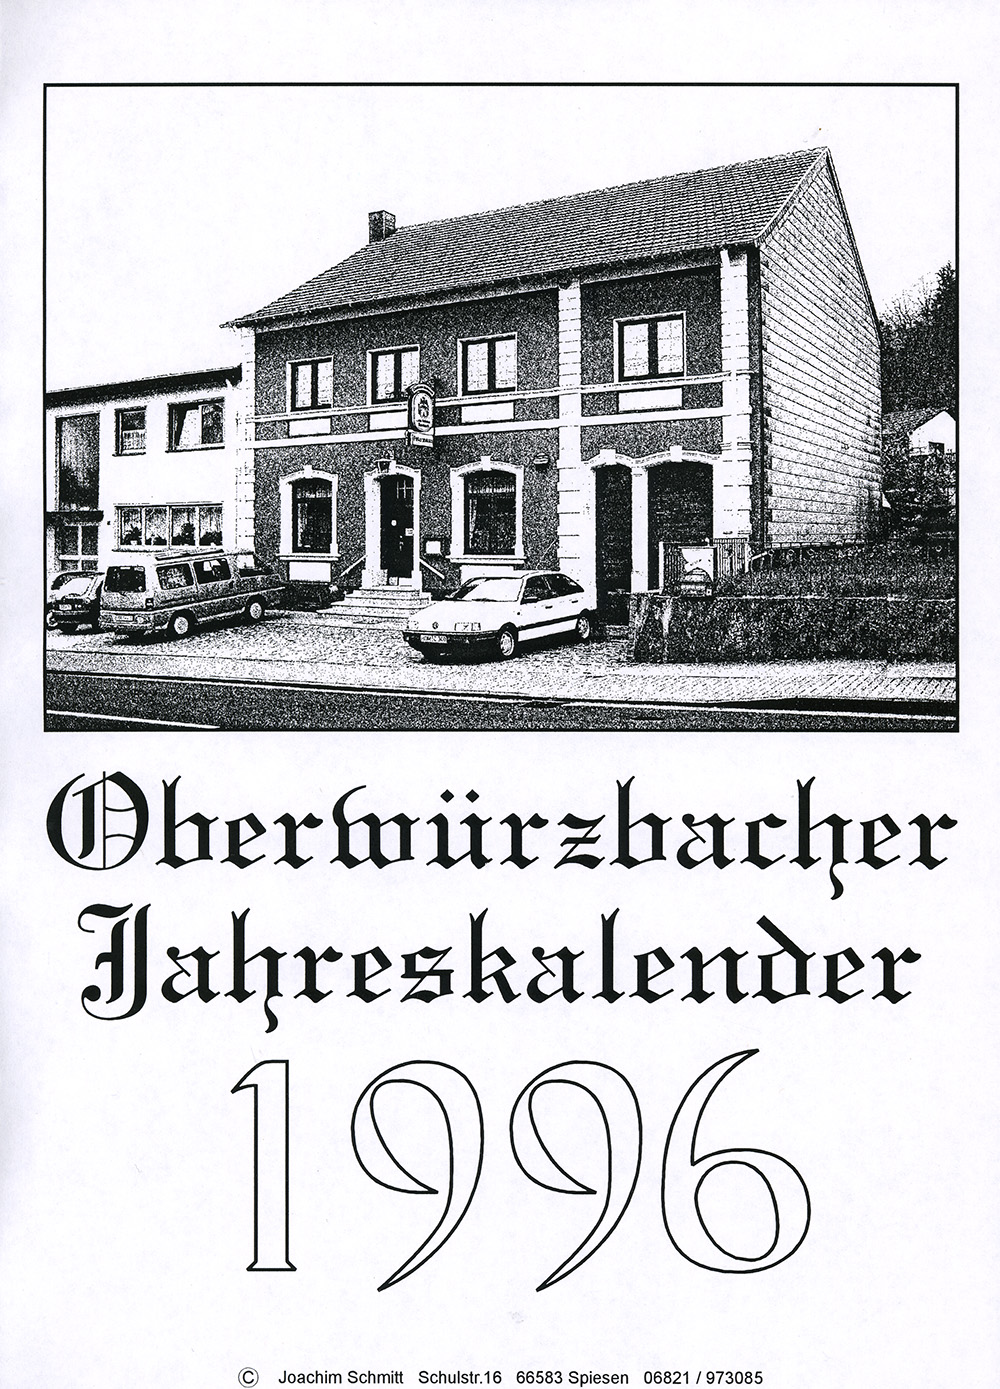 Titelblatt Heimatkalender Oberwürzbach 1996